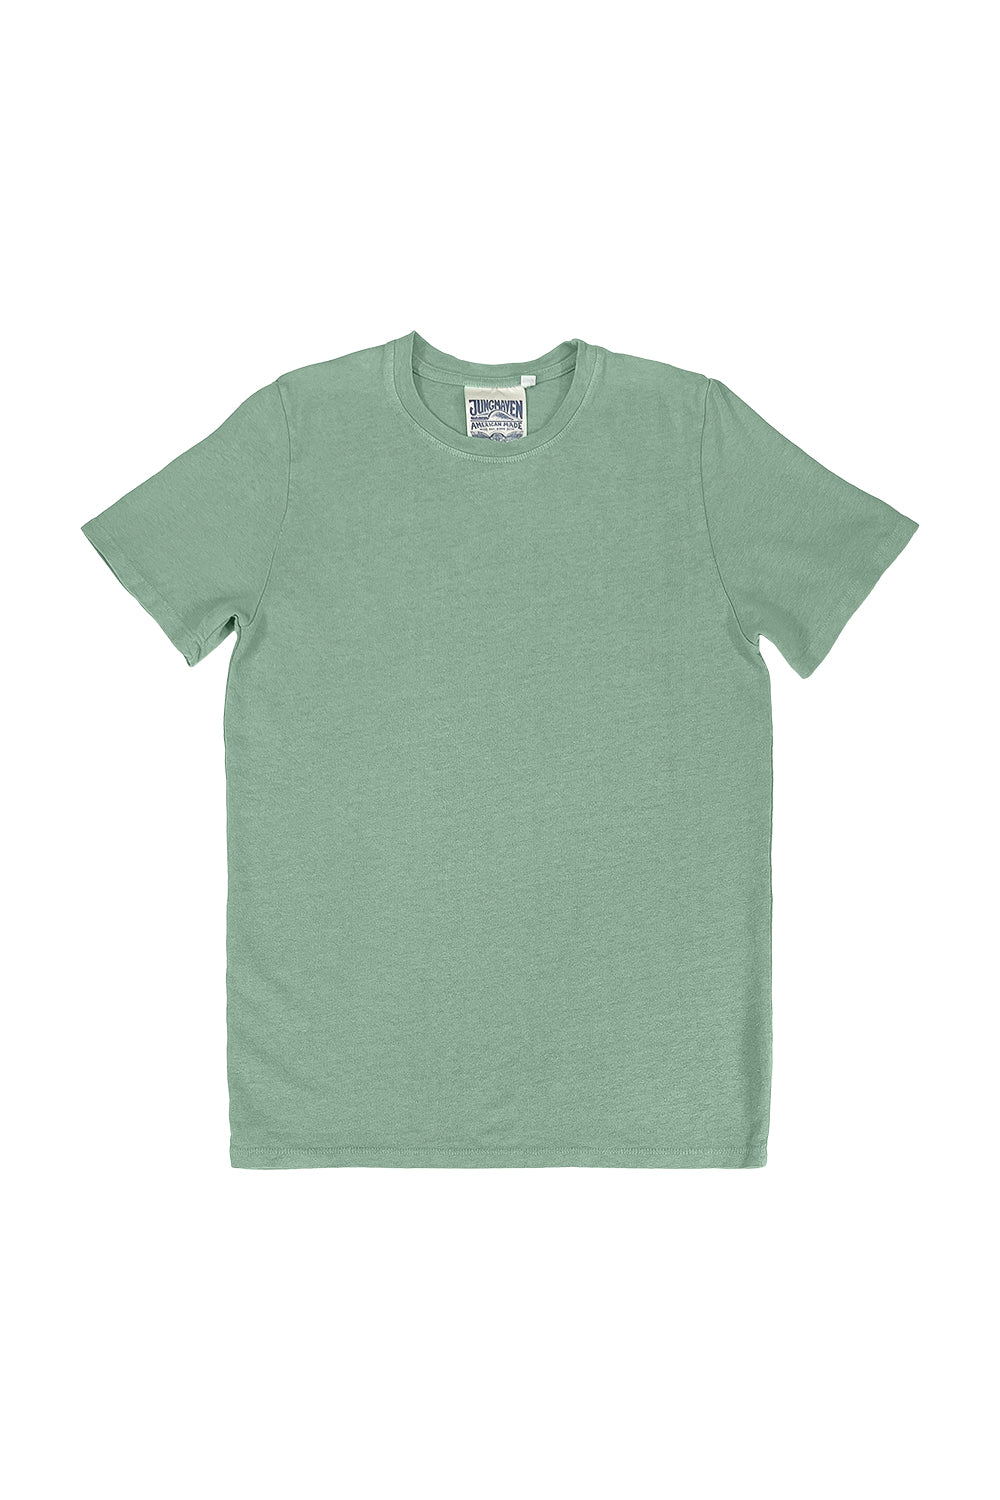 Boulder Tee | Jungmaven Hemp Clothing & Accessories / Color: Sage Green